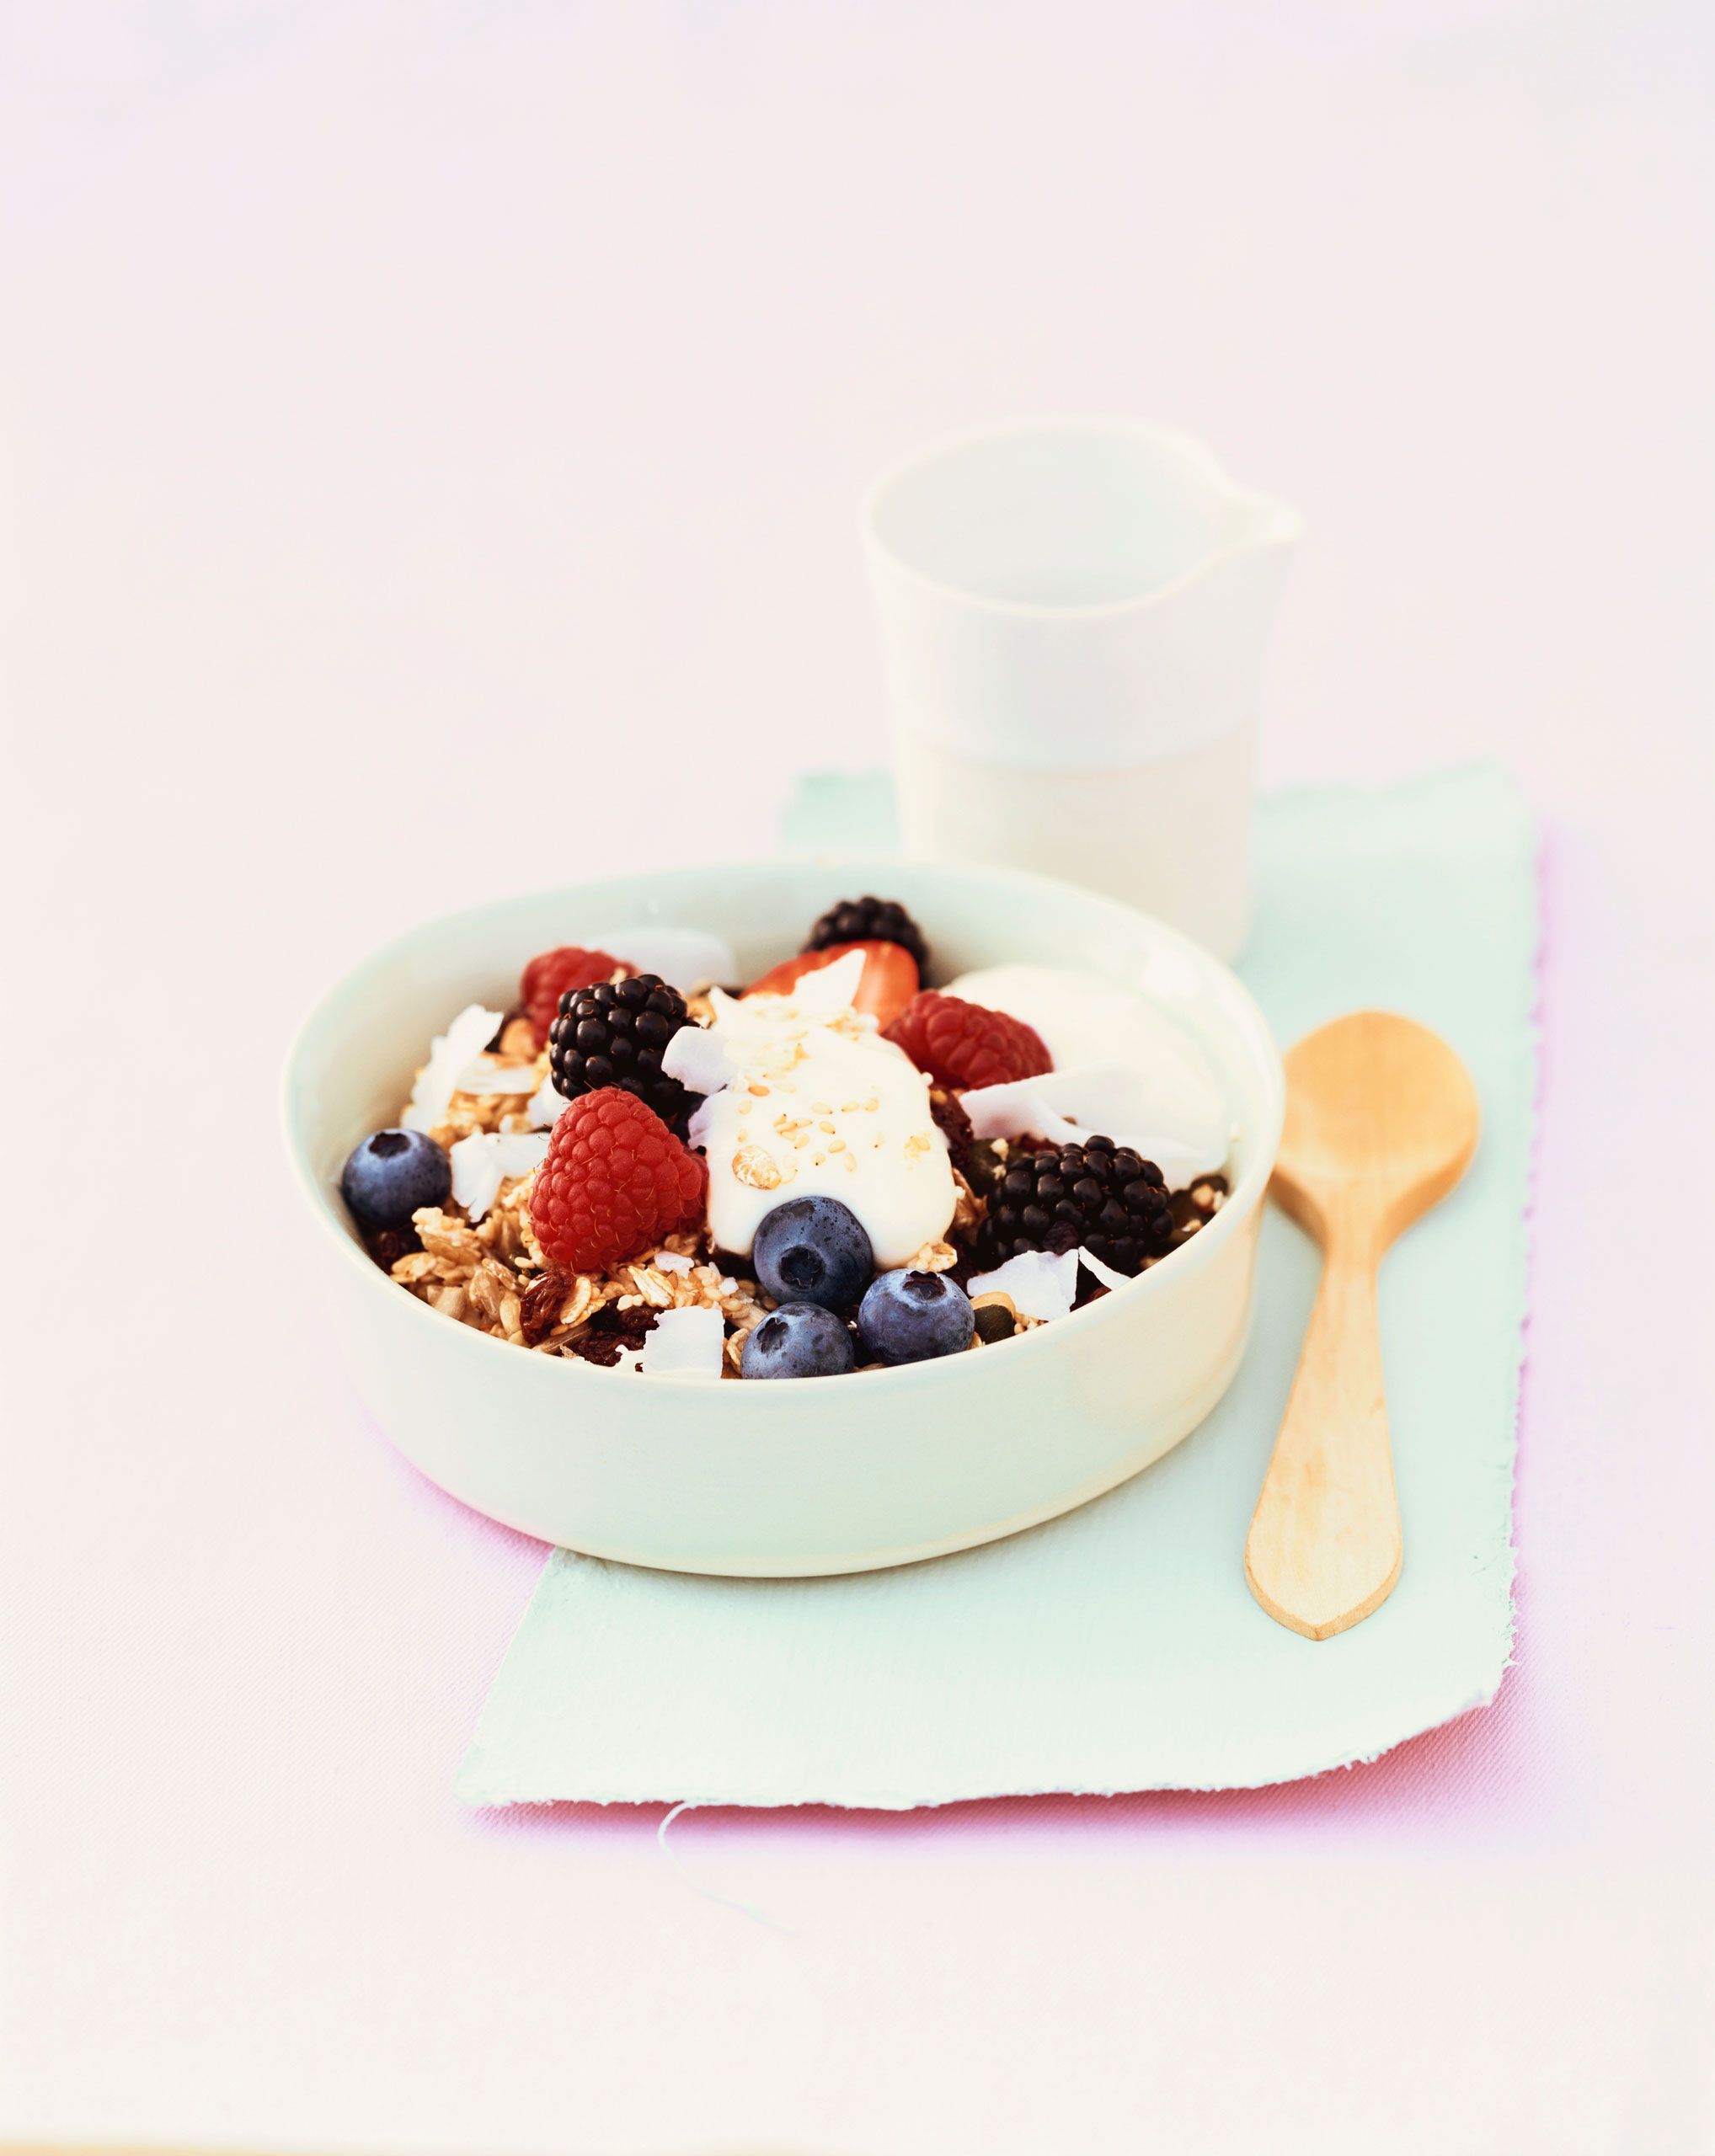 Muesli with berries and yoghurt